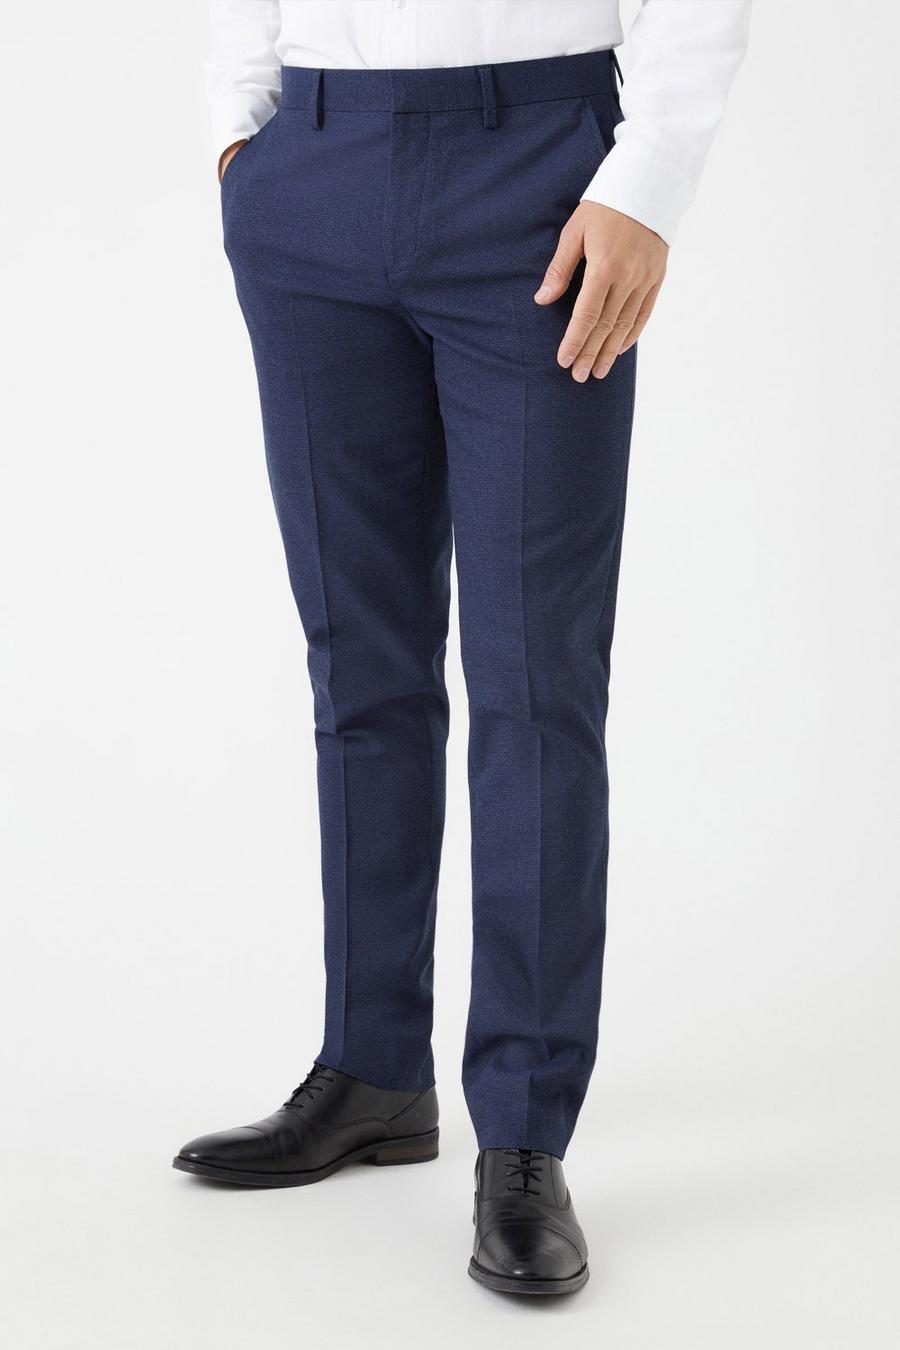 Slim  Fit Navy Marl Suit  Trousers